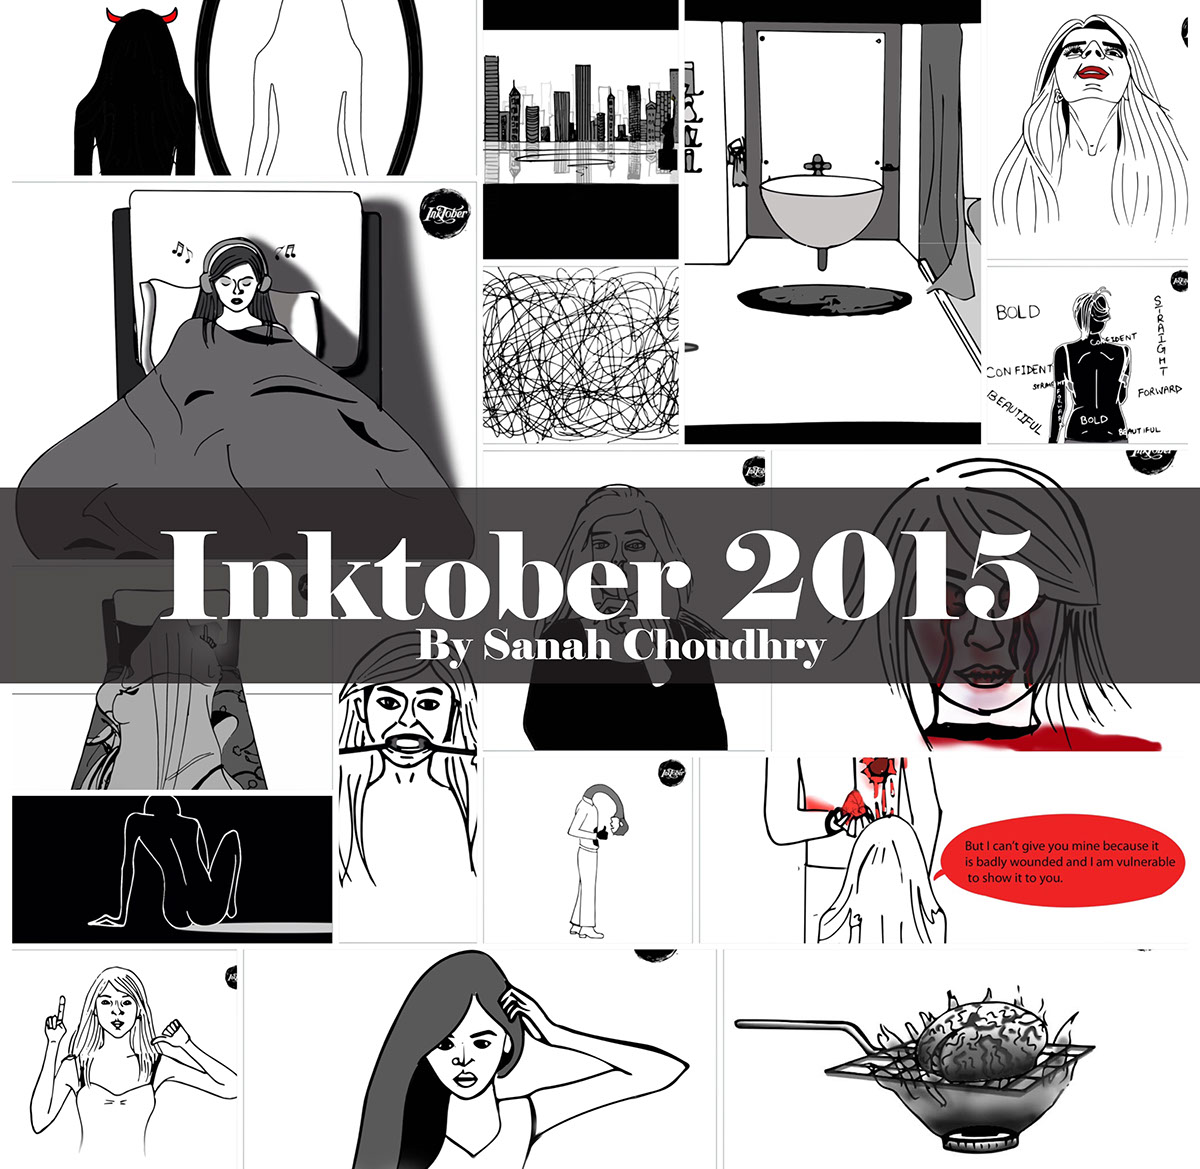 inktober inktober 2015 ink october Jake Parker 31 Days 31 drawings art